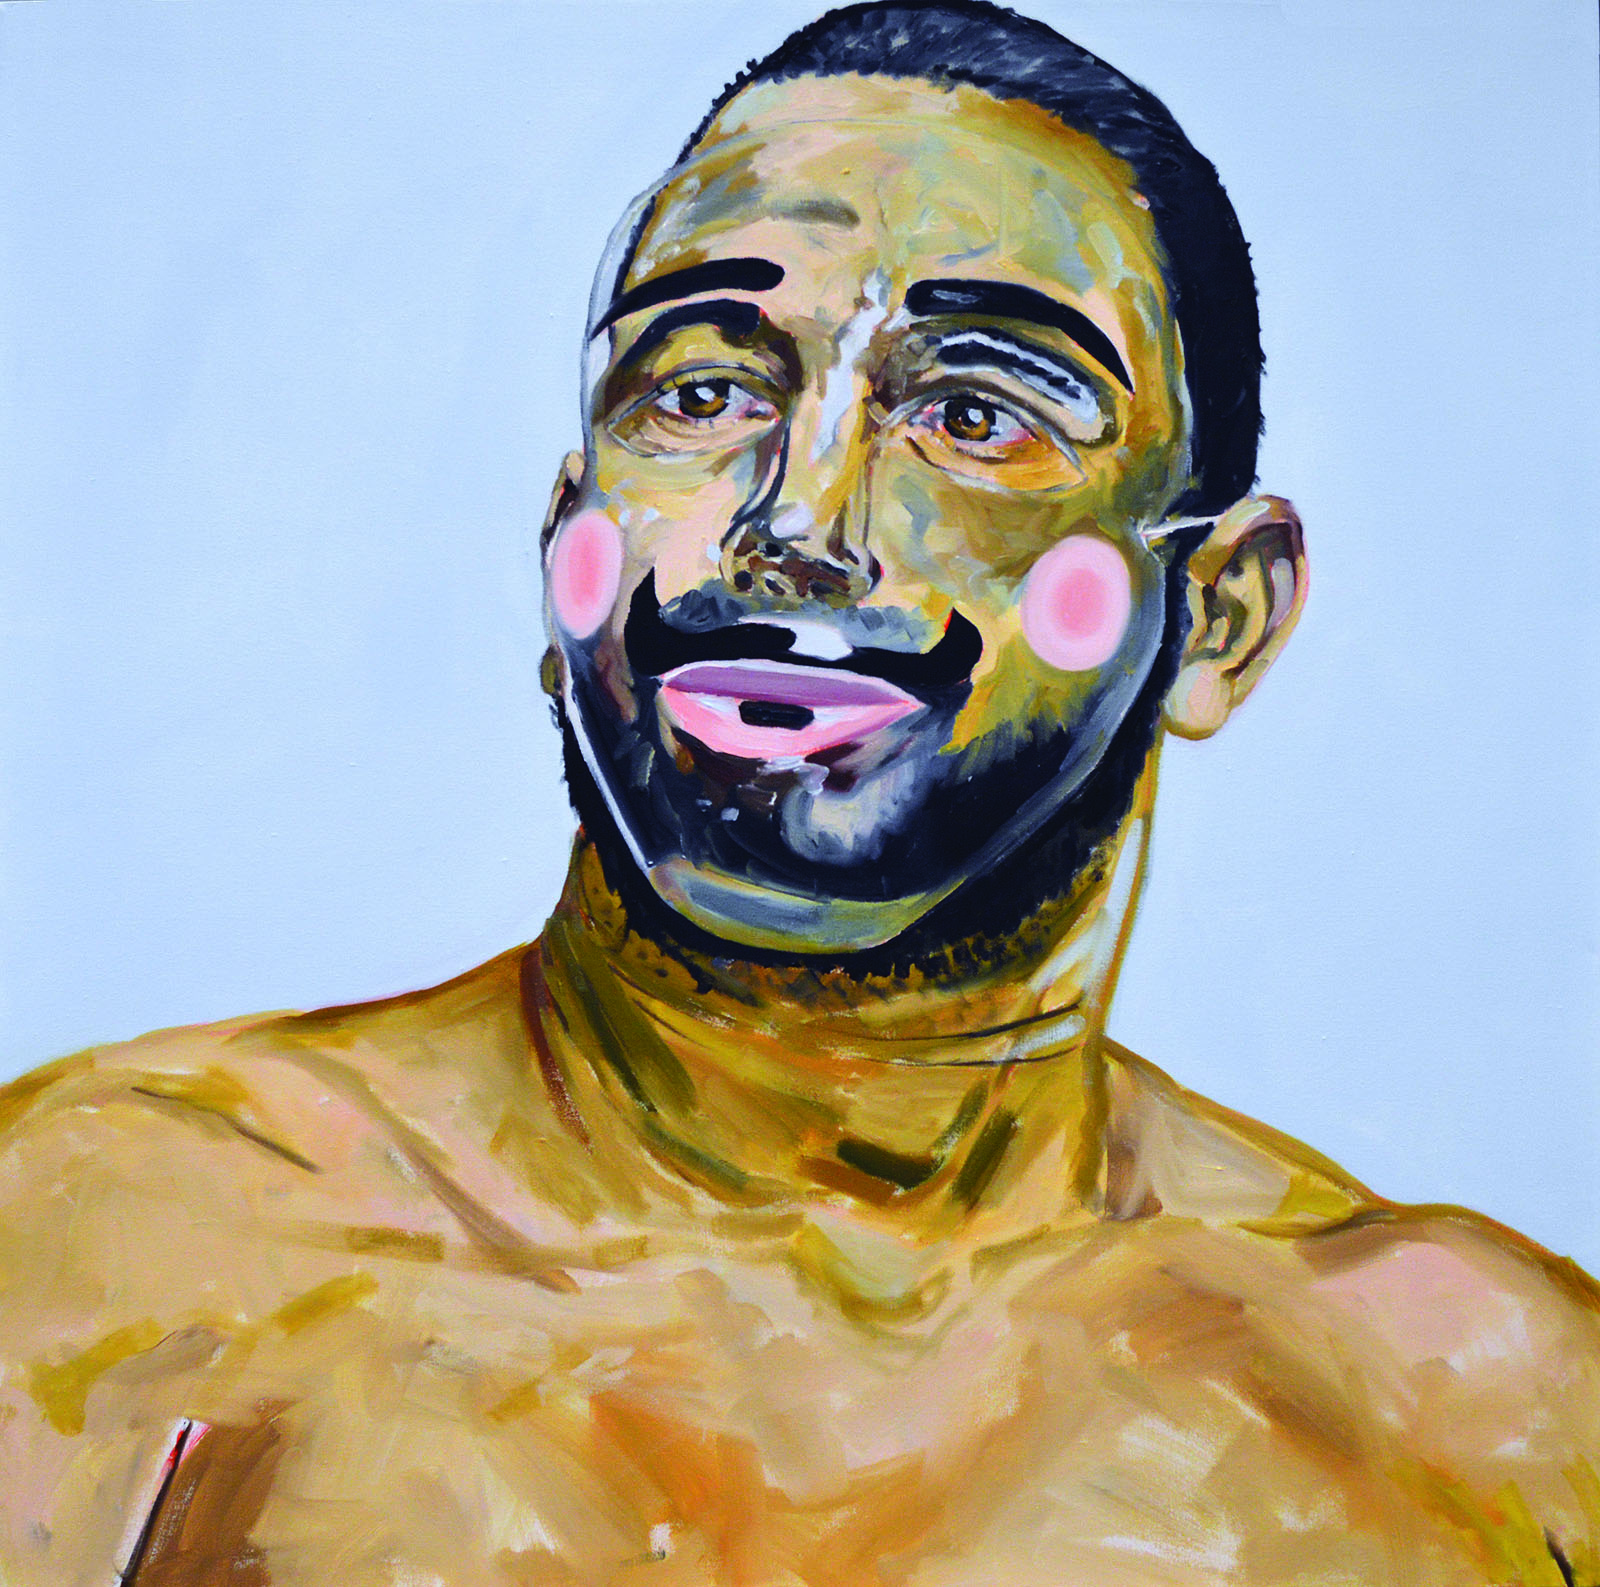 Michael Dixon "I'm a Black Man in a White World", Oil on canvas, 36"x36", 2017